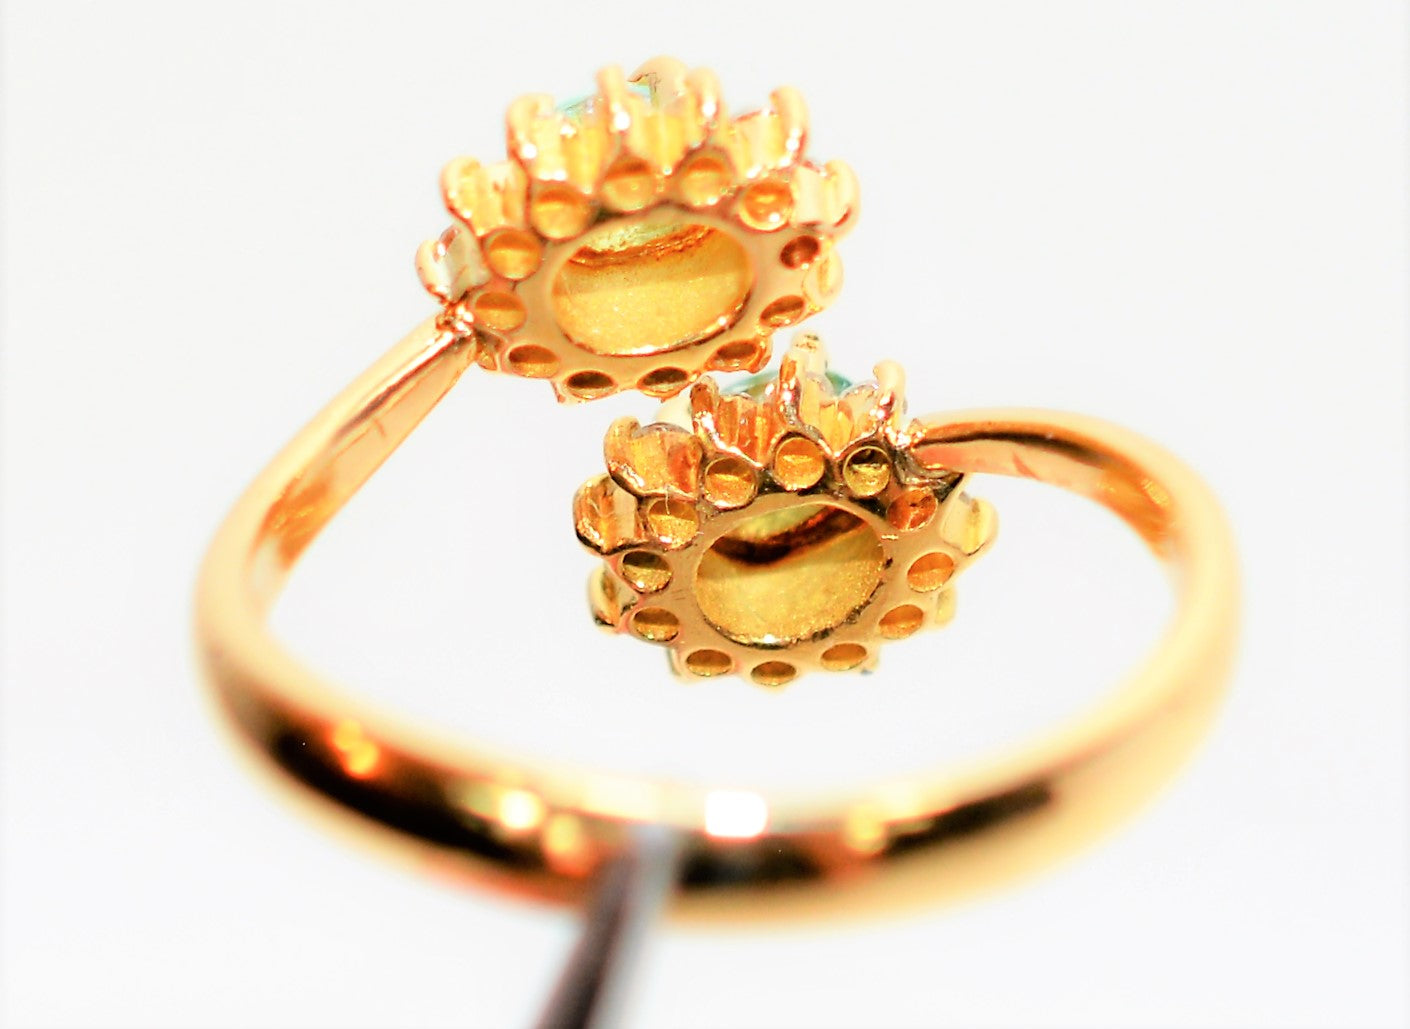 Natural Paraiba Tourmaline & Diamond Ring 18K Solid Gold .44tcw Gemstone Cluster Women's Ring Estate Jewelry Jewellery Fine Jewelry